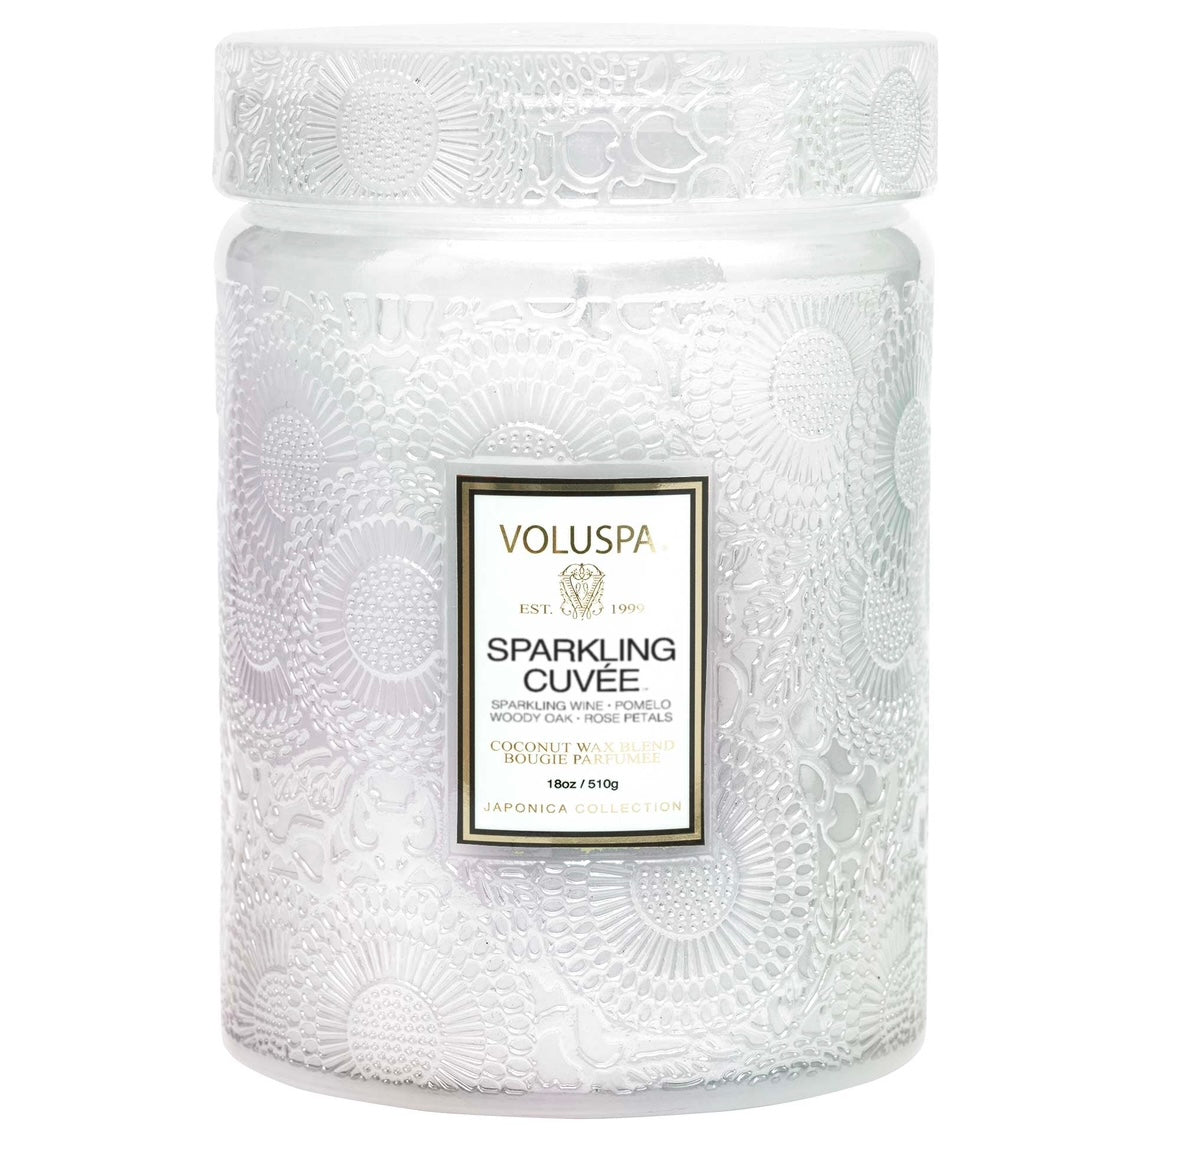 Voluspa Large Glass Jar candle - Sparkling Cuvée